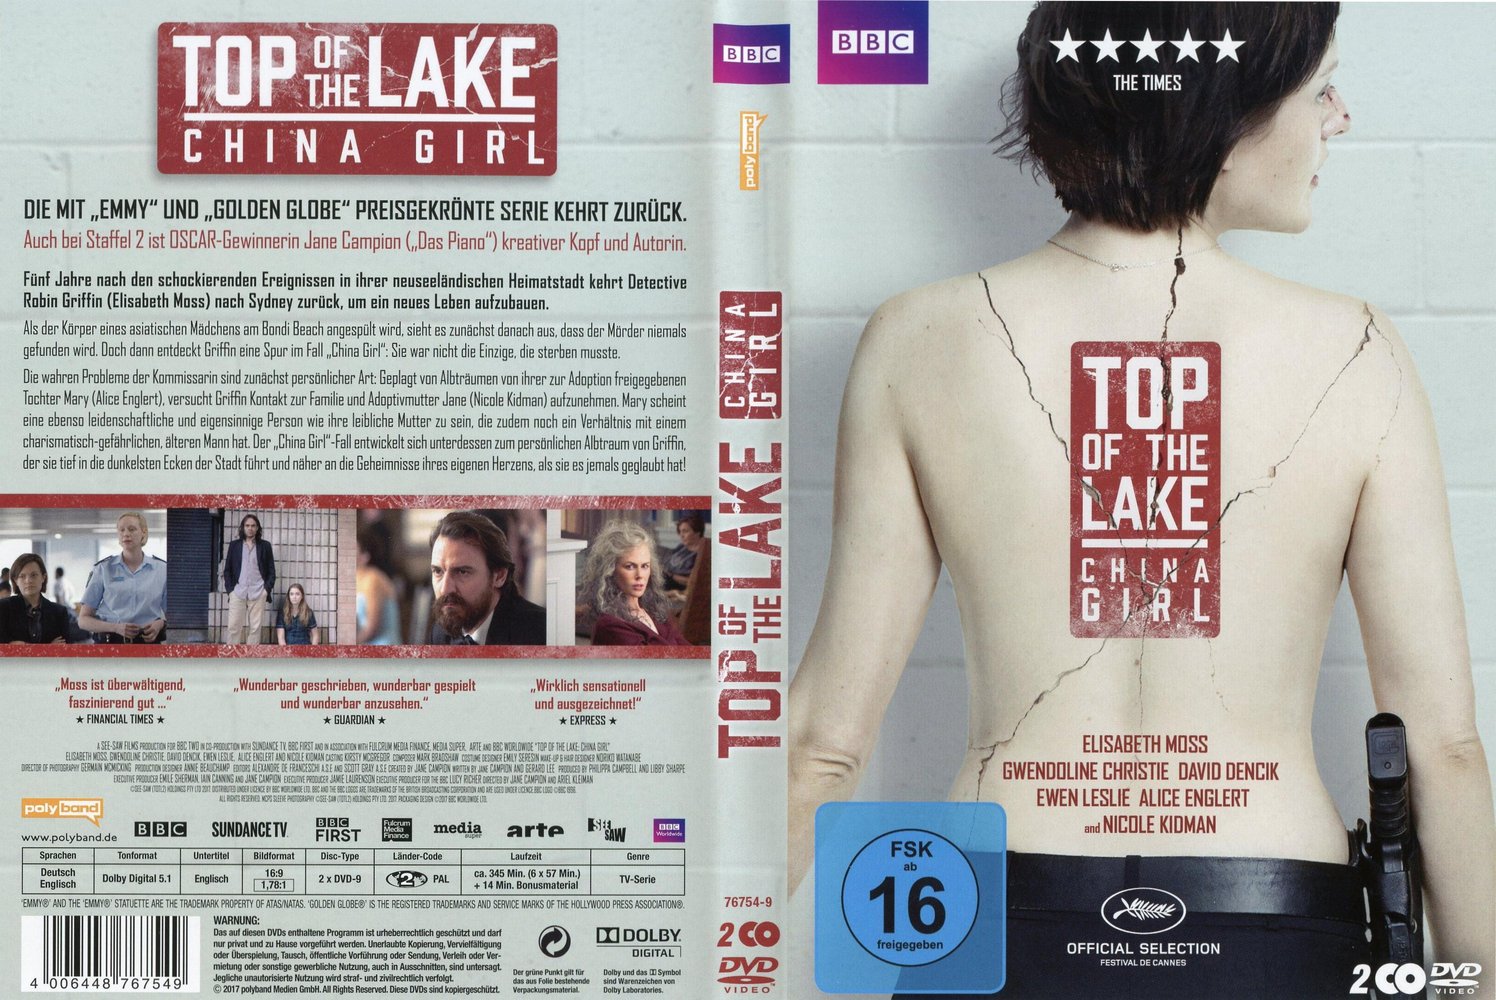 Kostbar Rettidig jogger Top of the Lake - Staffel 2 - China Girl: DVD oder Blu-ray leihen -  VIDEOBUSTER.de